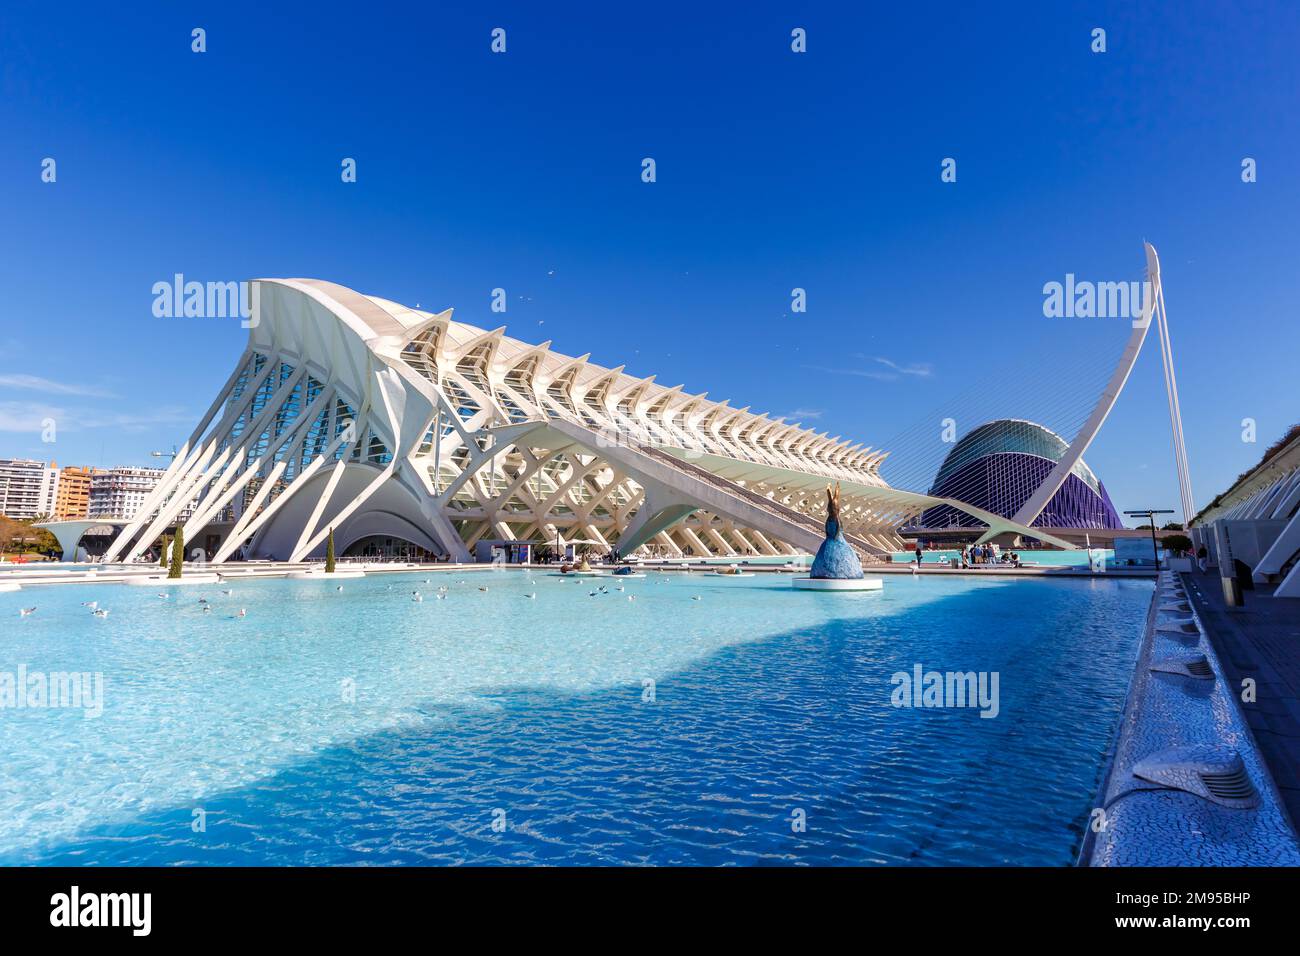 Valencia, Spain - February 18, 2022: Ciutat de les Arts i les Ciencies with science museum building modern architecture by Santiago Calatrava in Valen Stock Photo